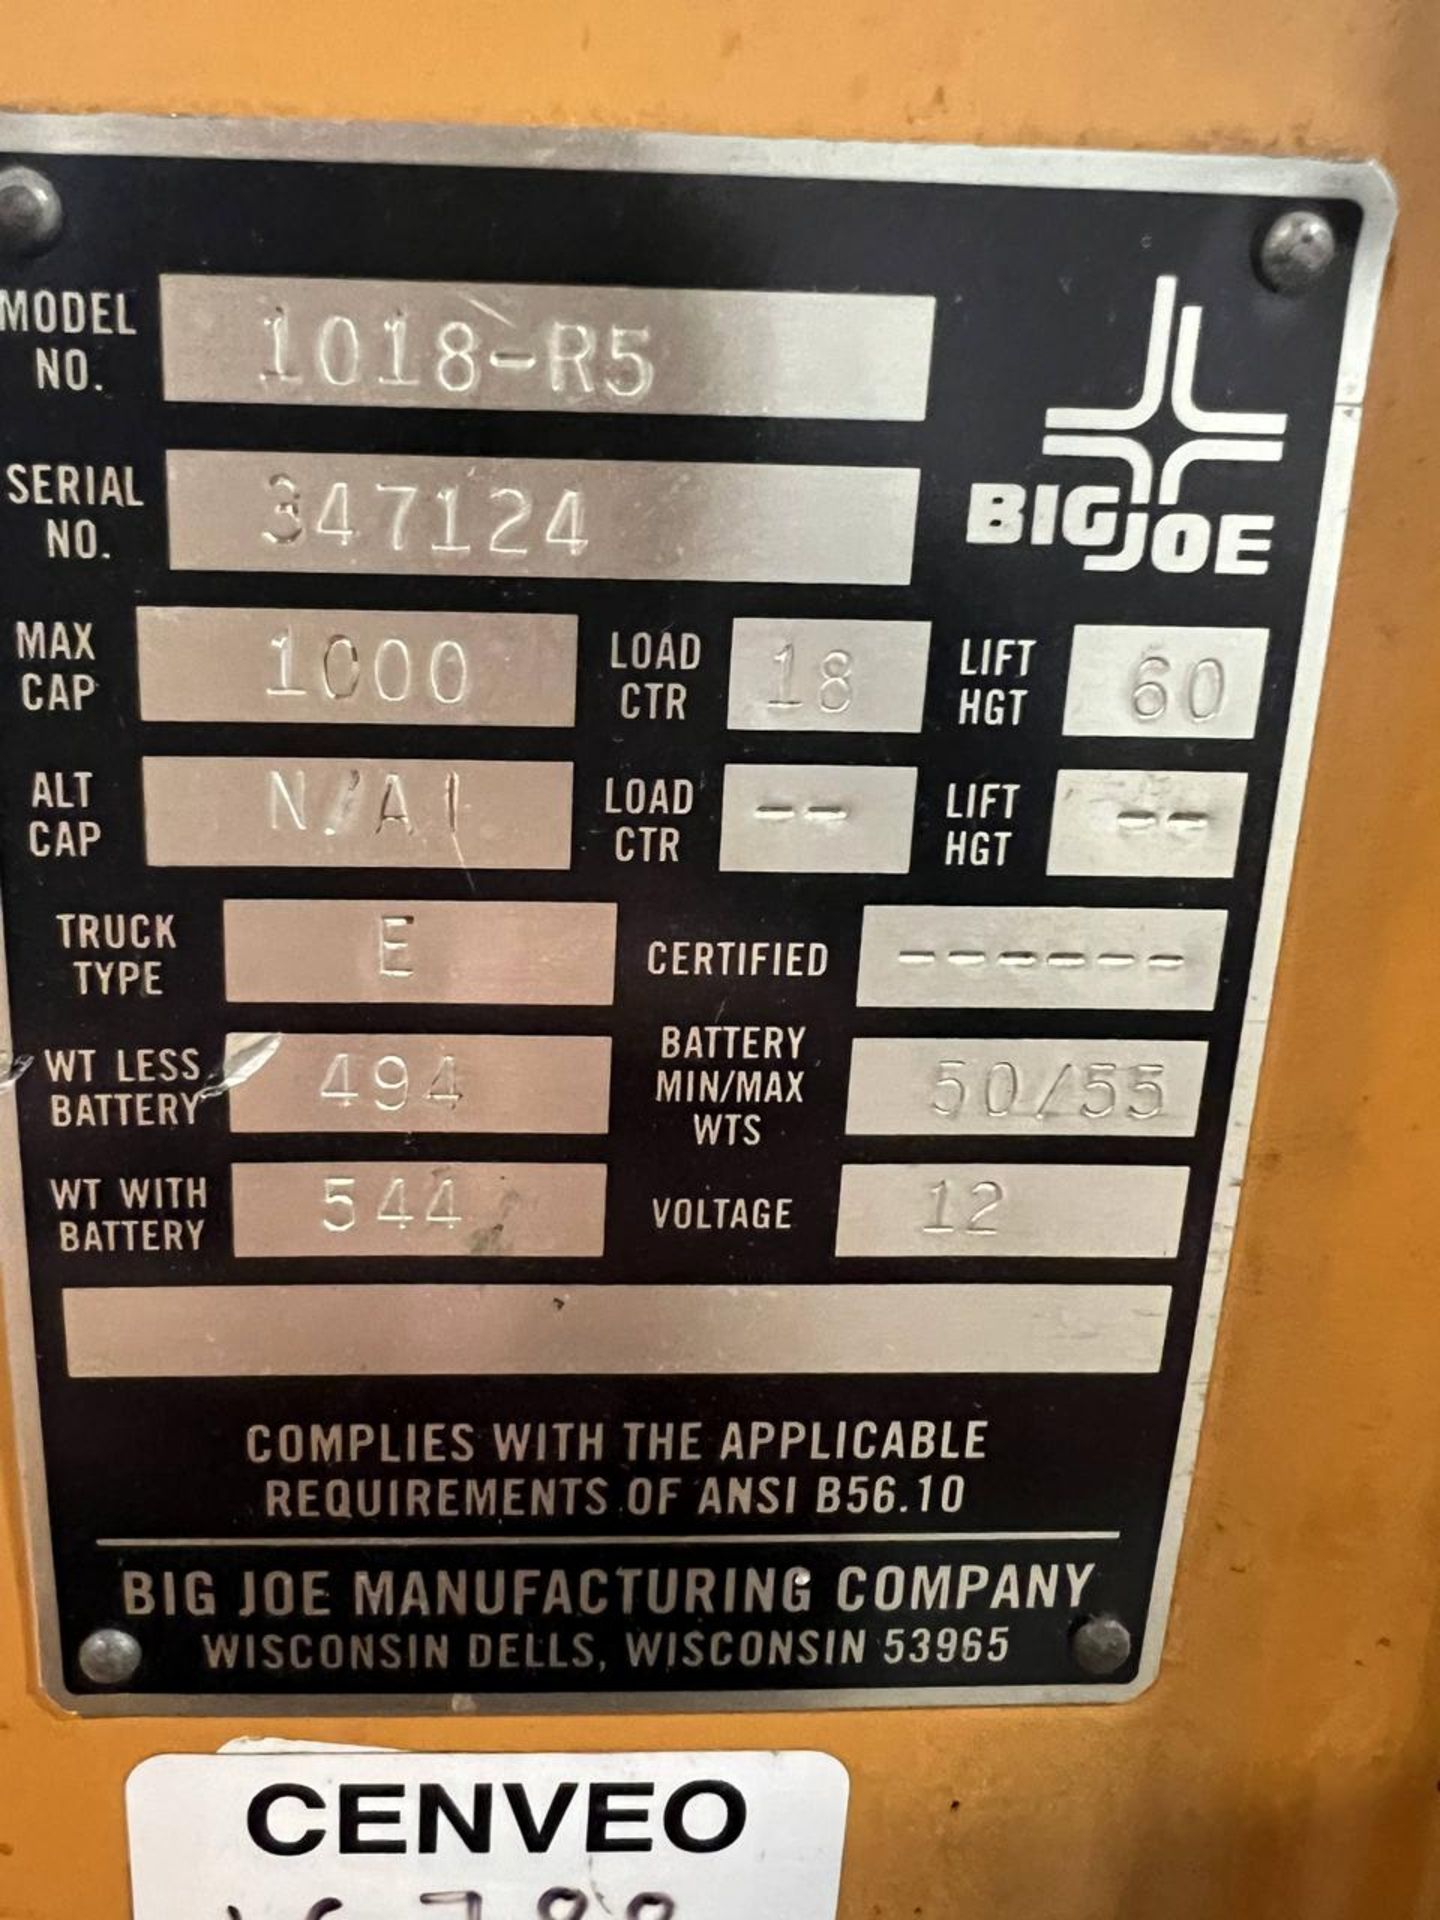 BIG JOE 1018-R5 1,000 POUND CAPACITY ELECTRIC LIFT - Image 5 of 5